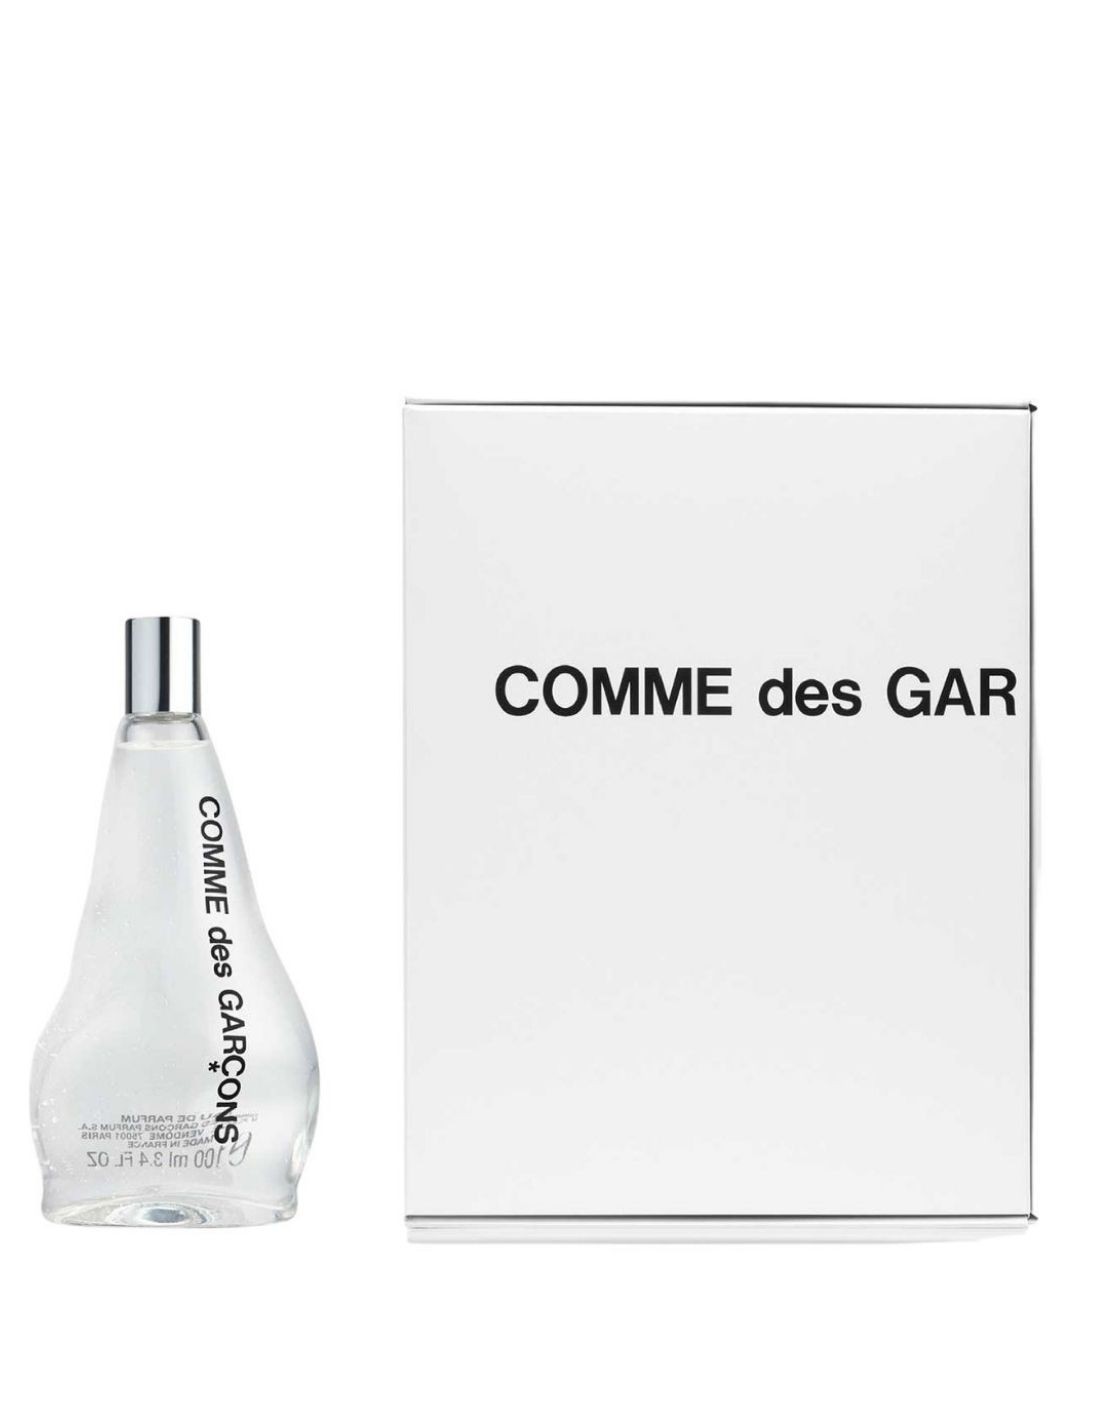 CHANEL Glass N°5 Perfume Bottle Snow Globe 128221